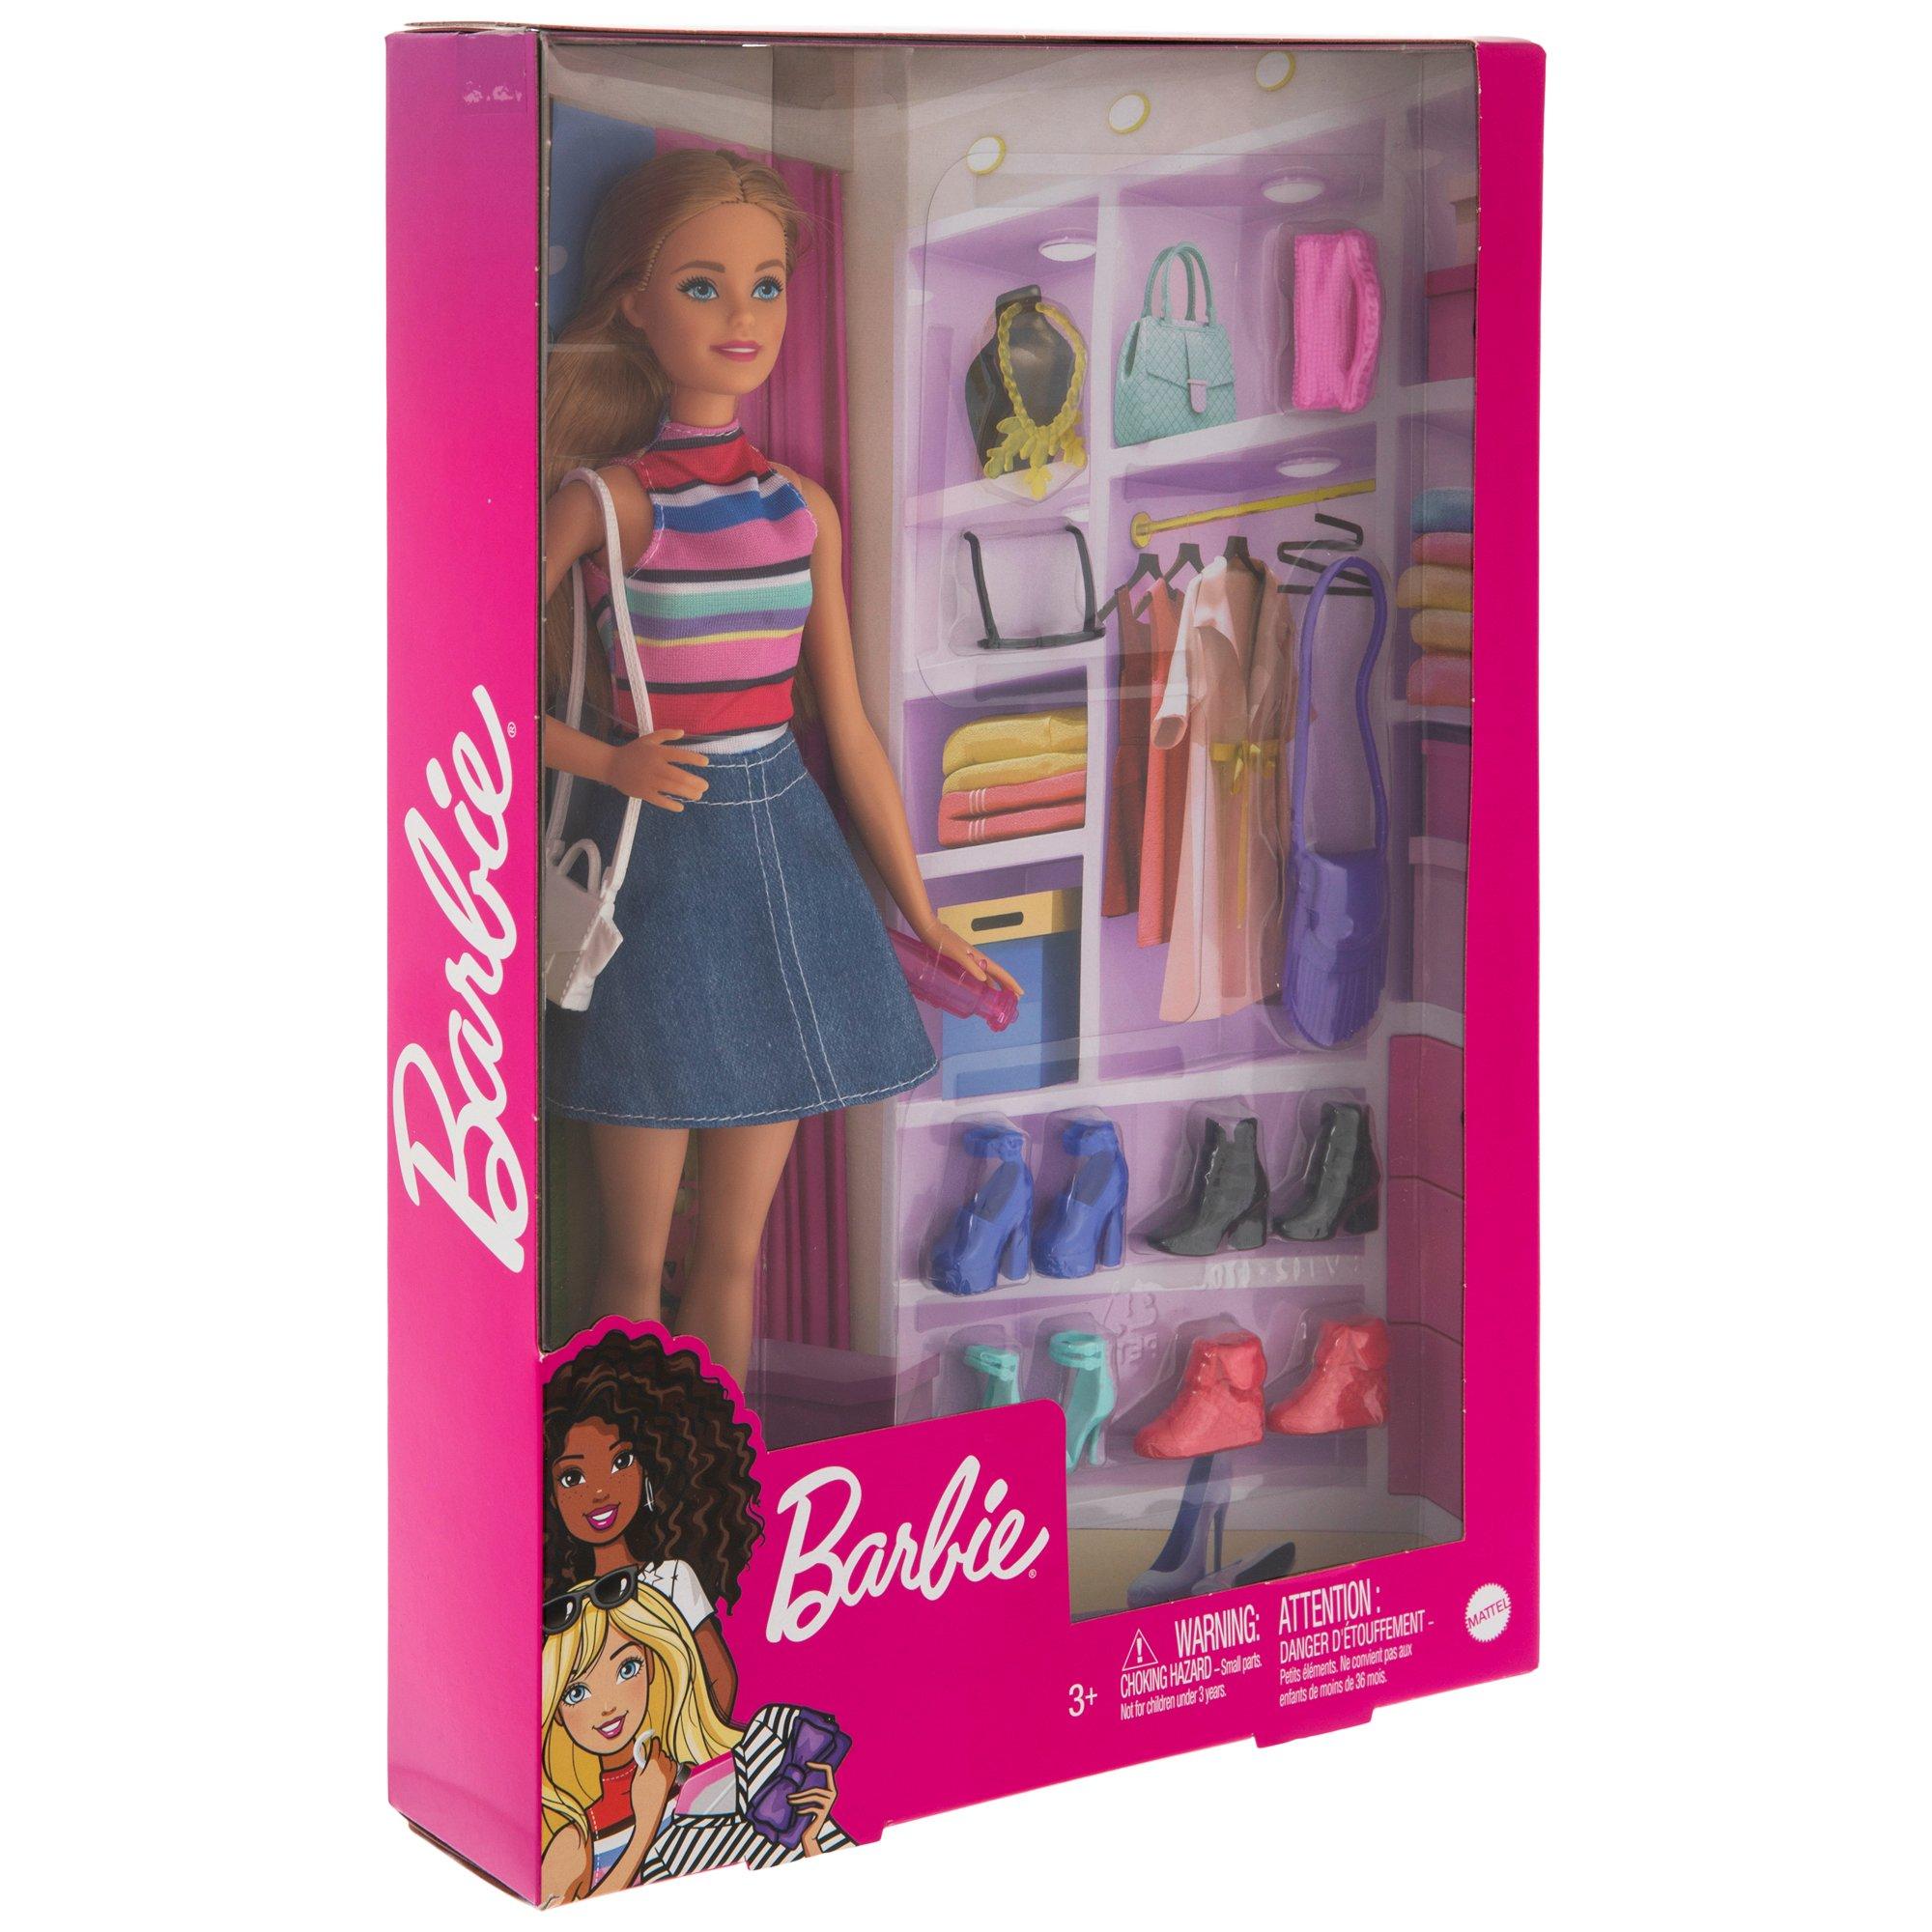 Barbie Doll & Accessories, Hobby Lobby